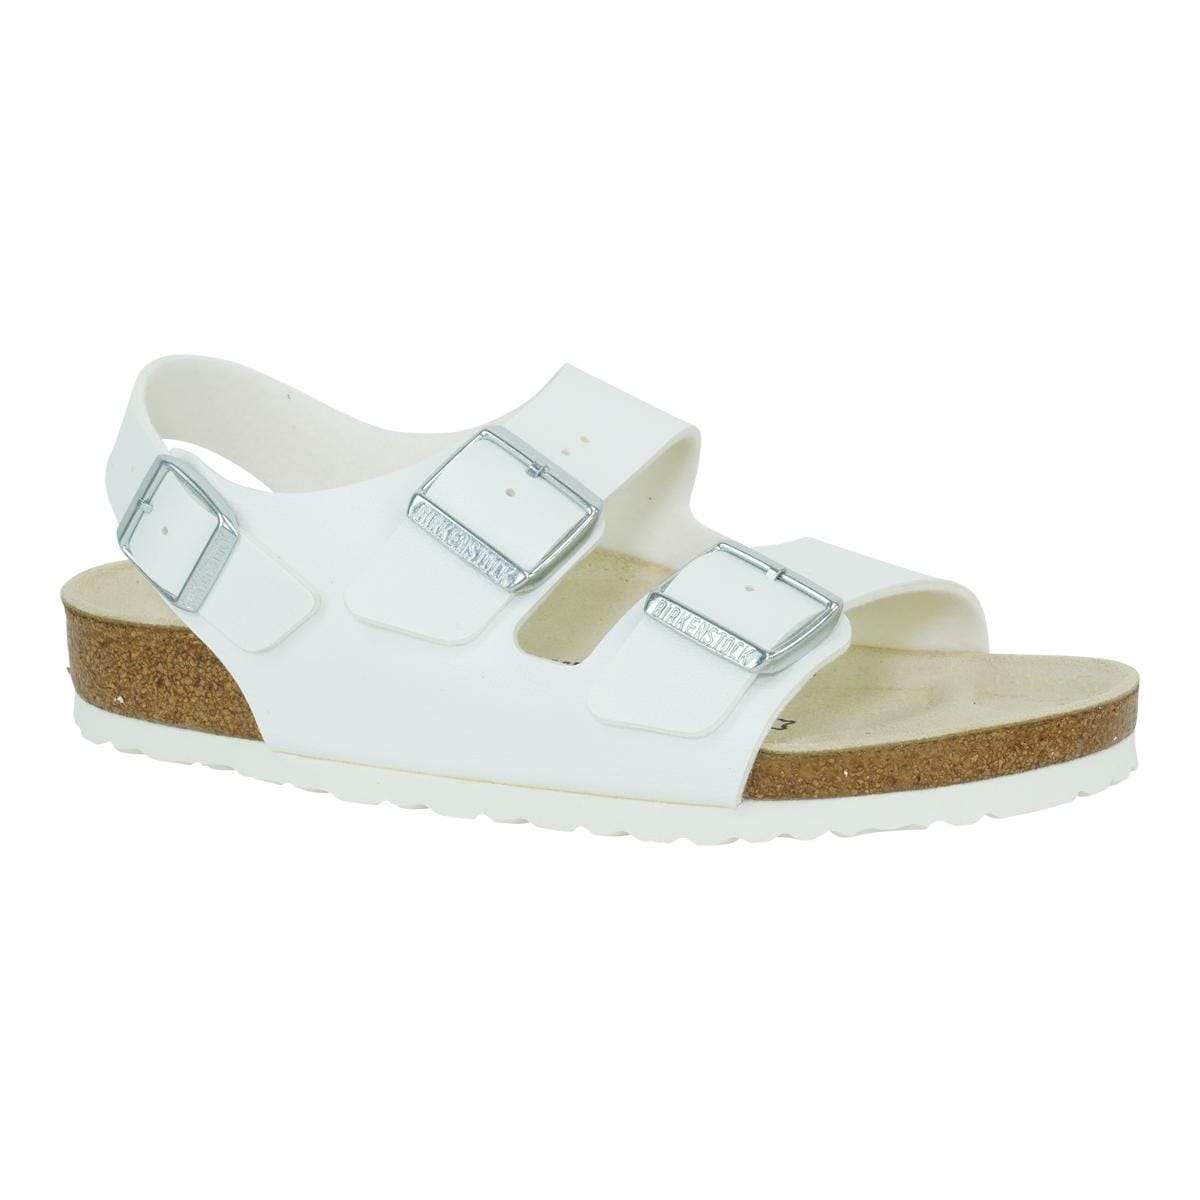 birkenstock milano sandals white